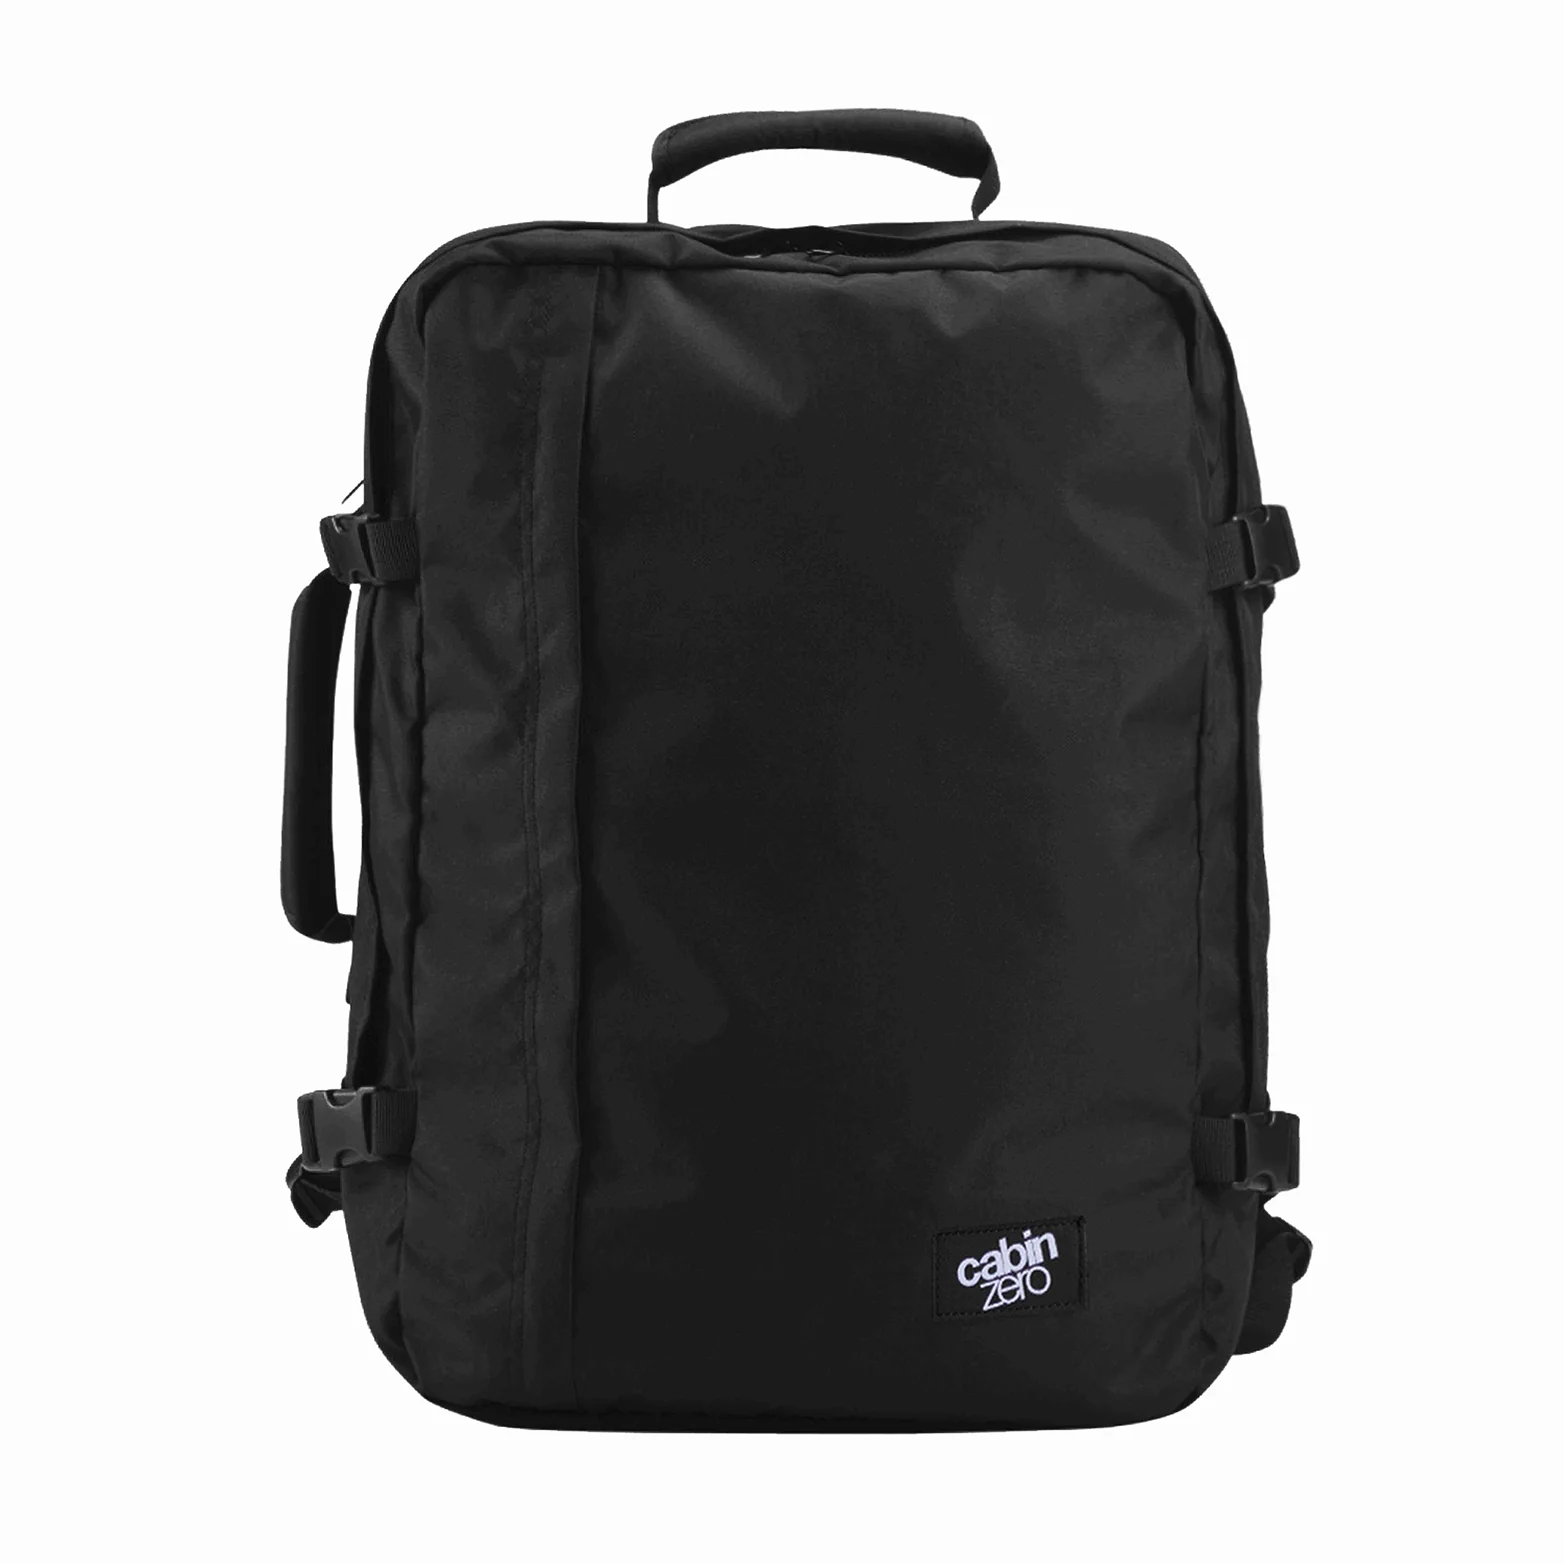 CabinZero - Classic 44L Backpack